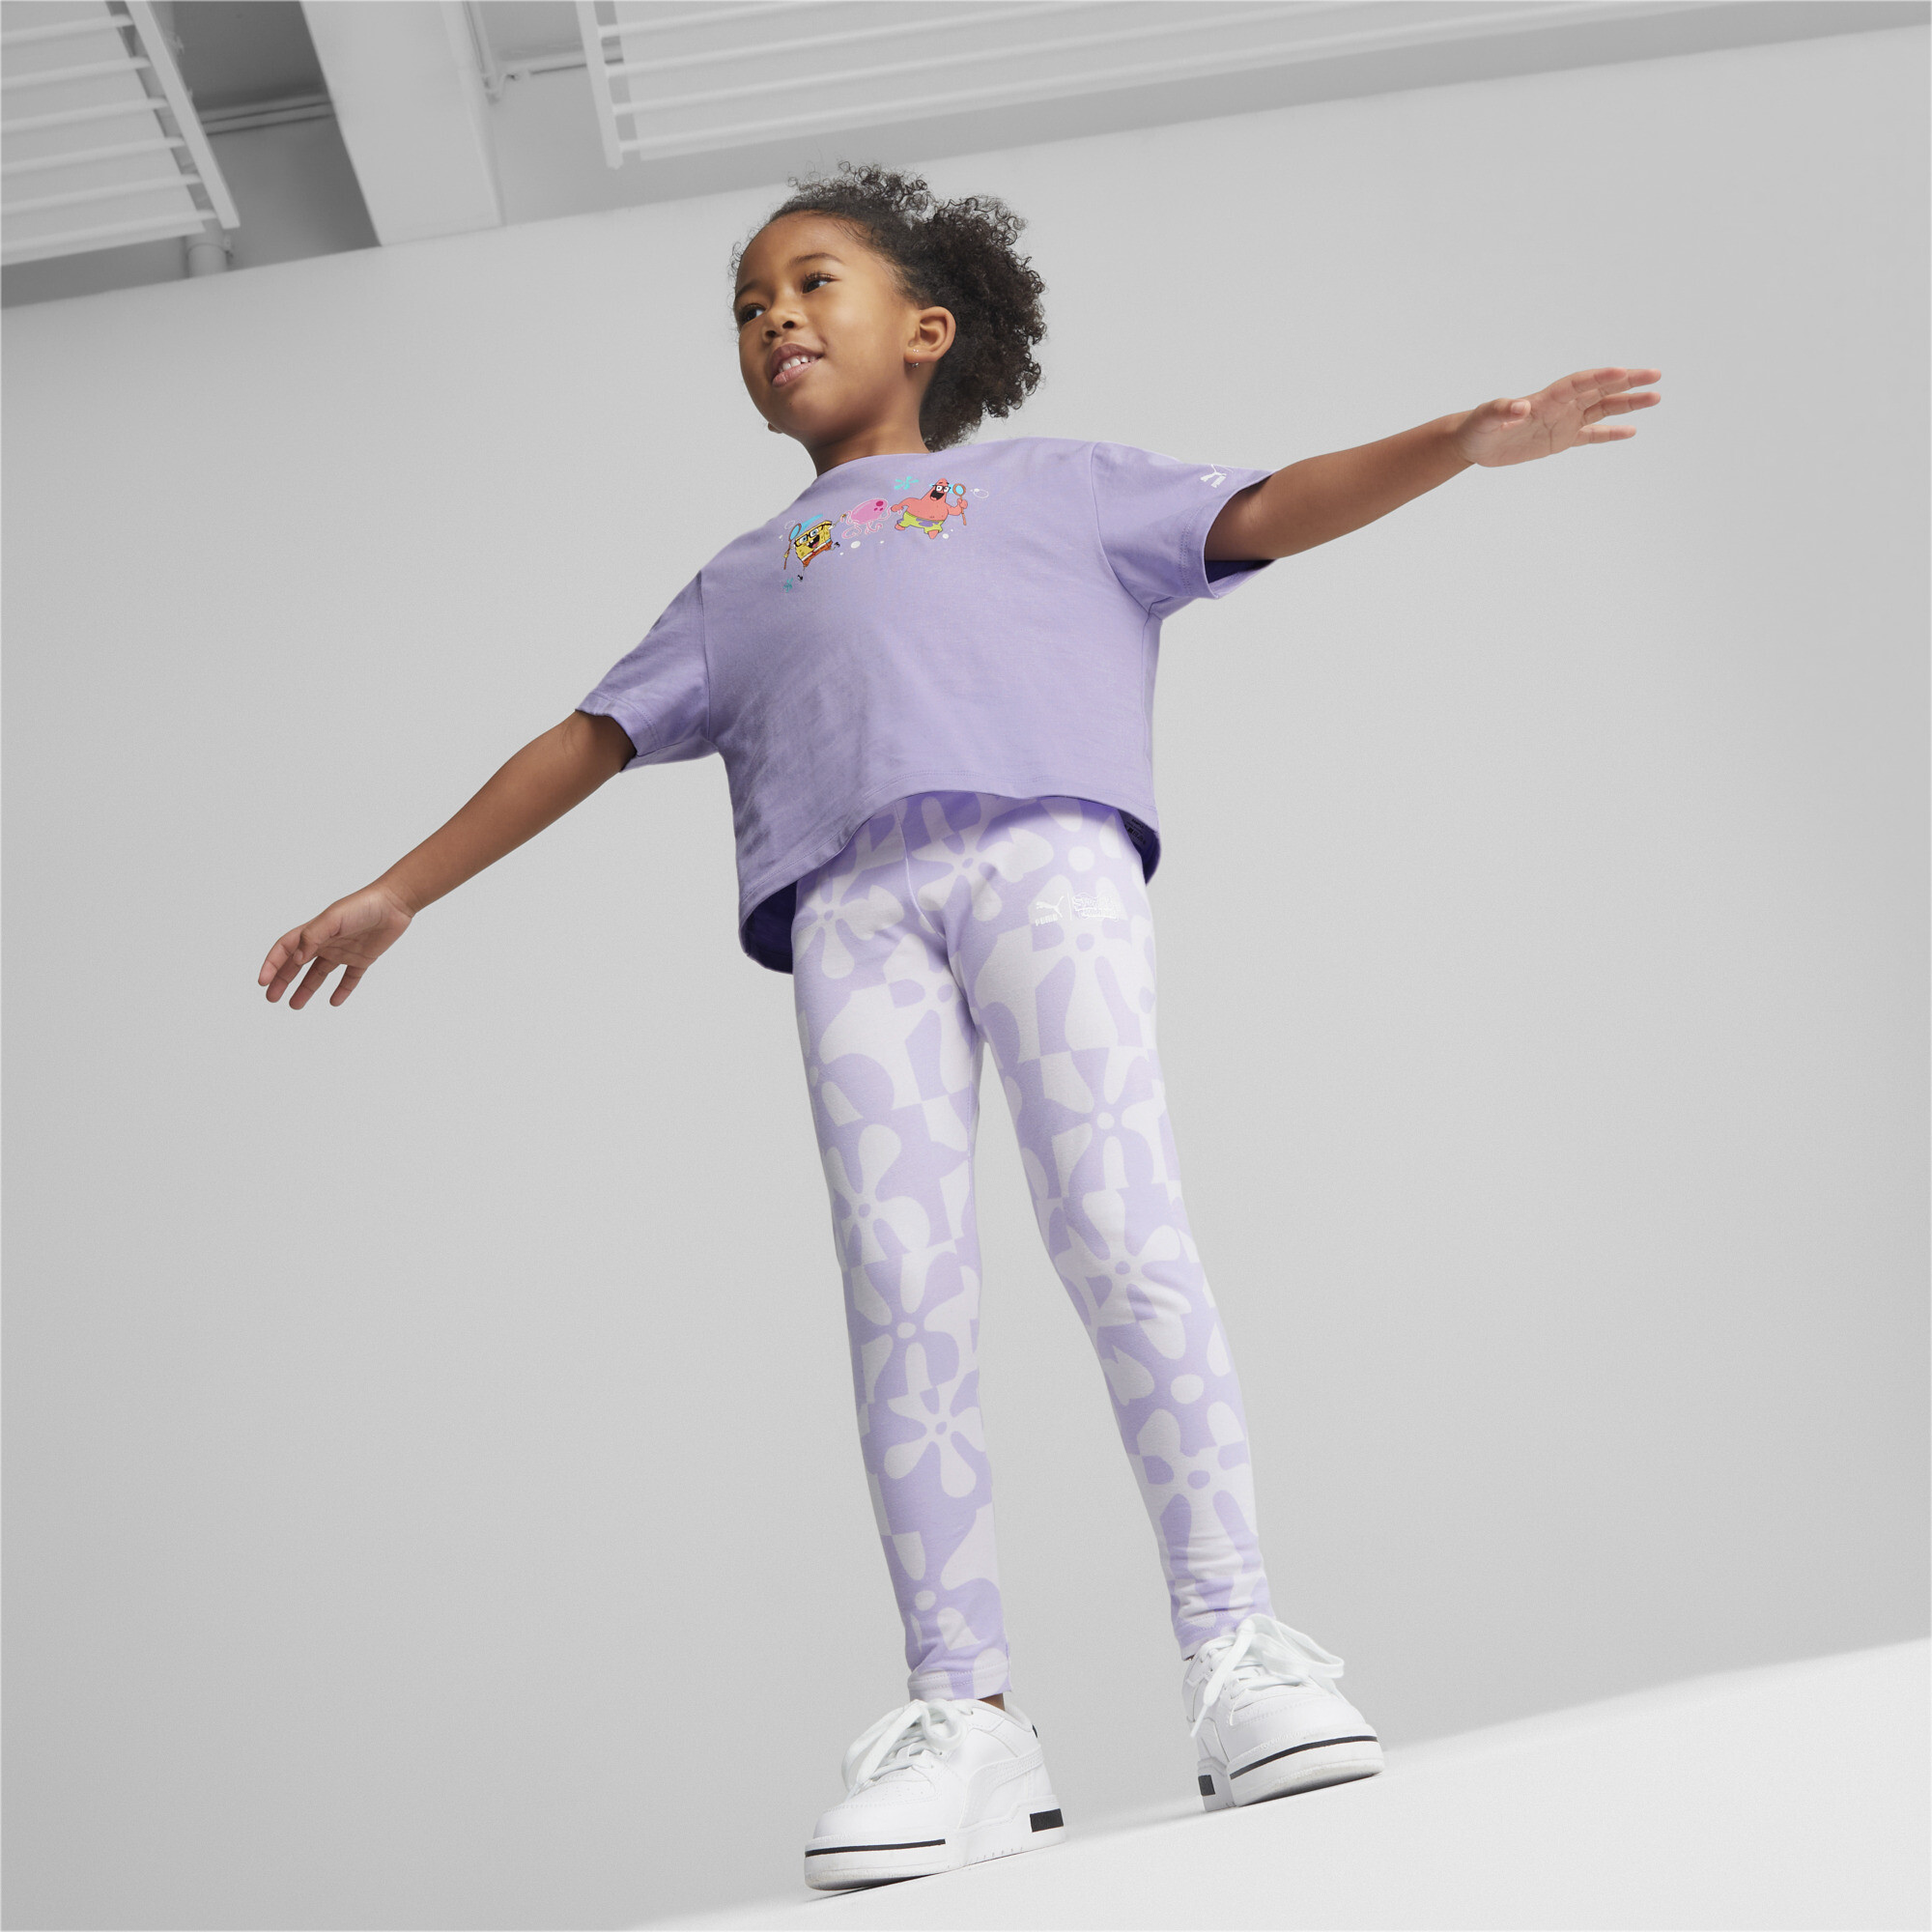 PUMA X SPONGEBOB T-Shirt Kids In Purple, Size 15-16 Youth